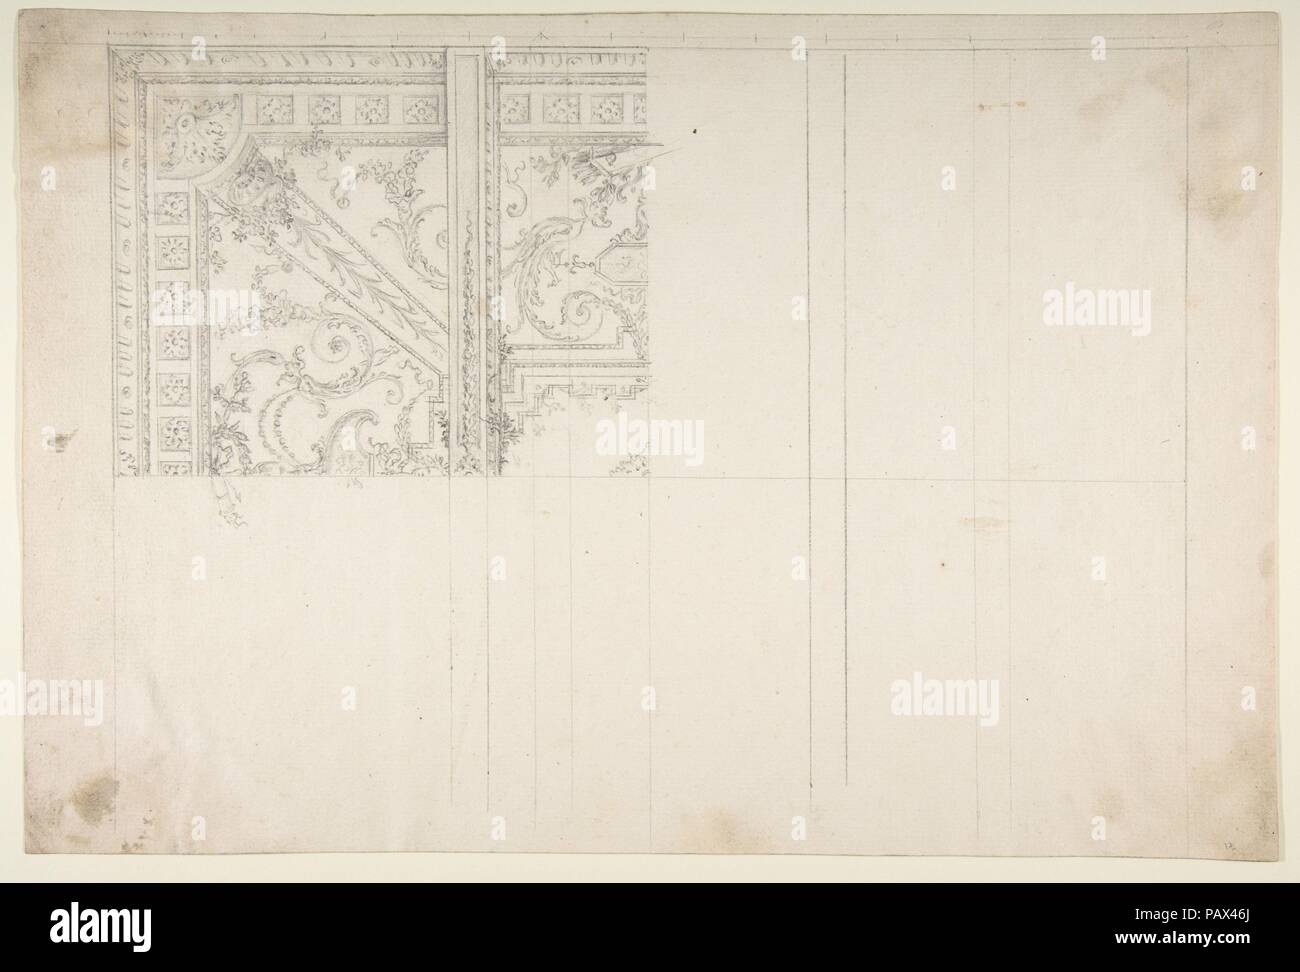 Design for Ceiling. Artist: Workshop of Leonardo Marini (Italian, Piedmontese documented ca. 1730-after 1797). Dimensions: 11 1/16 x 16 7/16 in. (28.1 x 41.8 cm). Date: 18th century. Museum: Metropolitan Museum of Art, New York, USA. Stock Photo